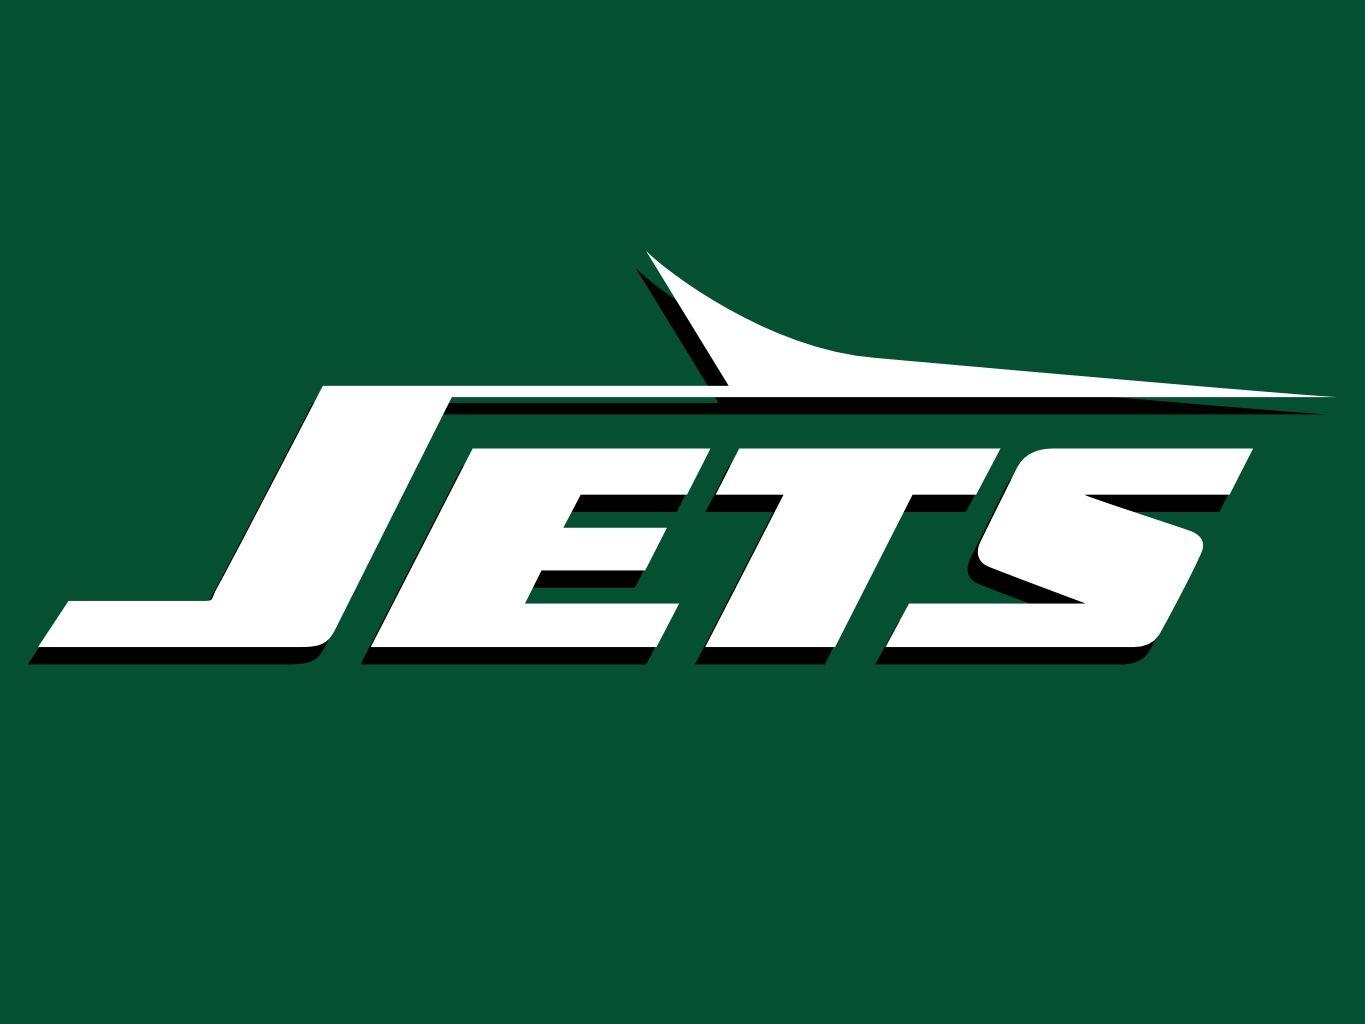 Vintage New York Jets Logo - NY Jets logo : nyjets